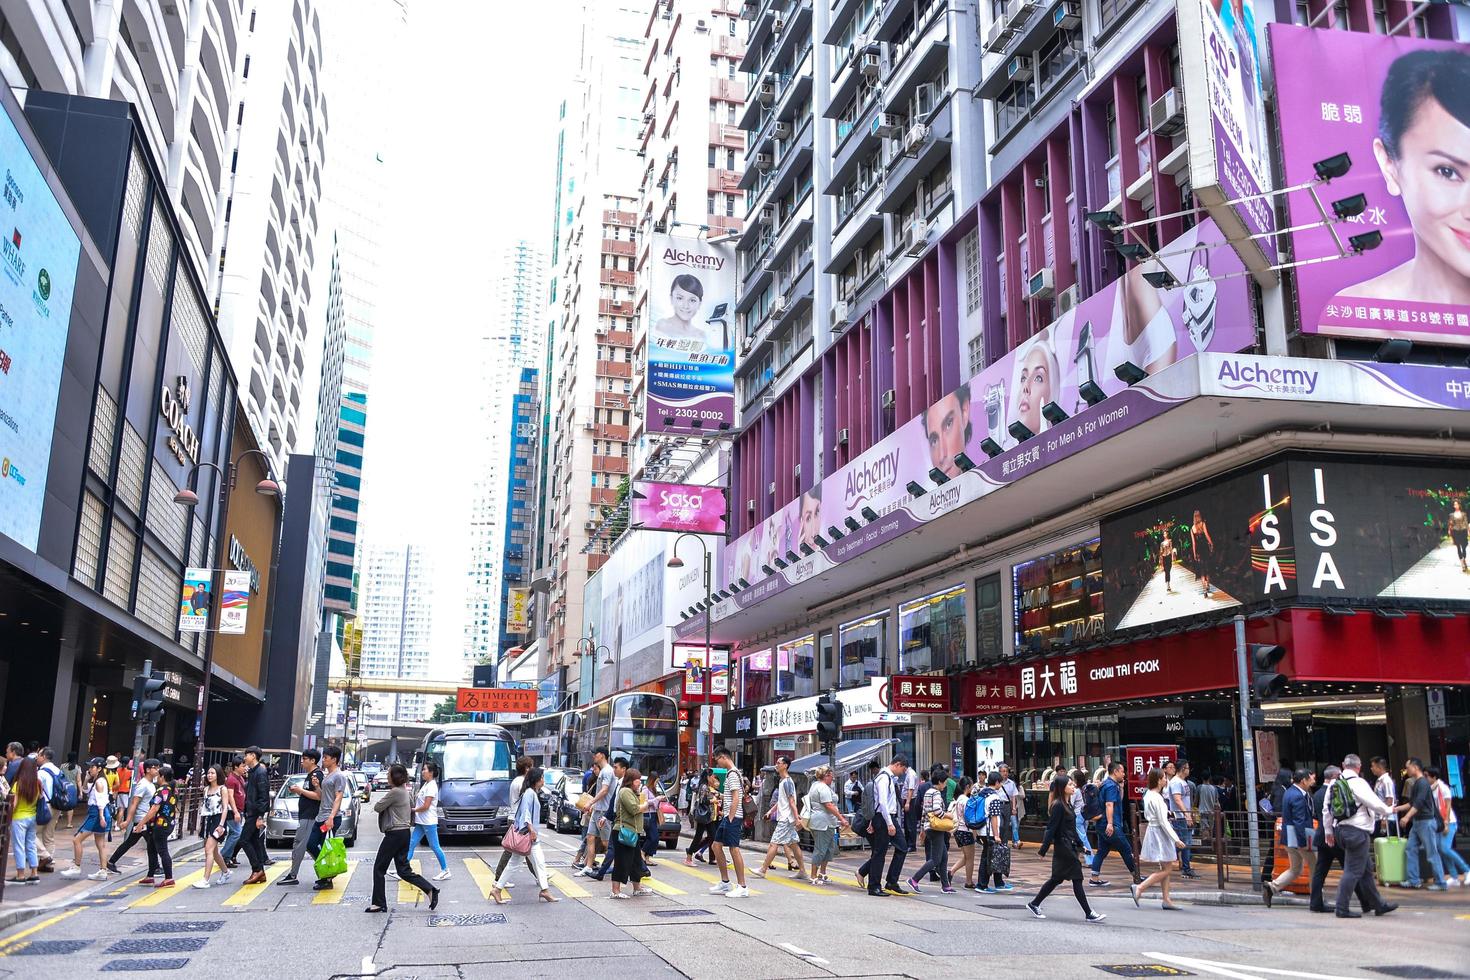 hong kong - abril 19, 2017-central distrito,, tráfego e cidade vida dentro ásia internacional o negócio e financeiro Centro. a cidade é 1 do a a maioria populosa áreas dentro a mundo. hong kong. foto